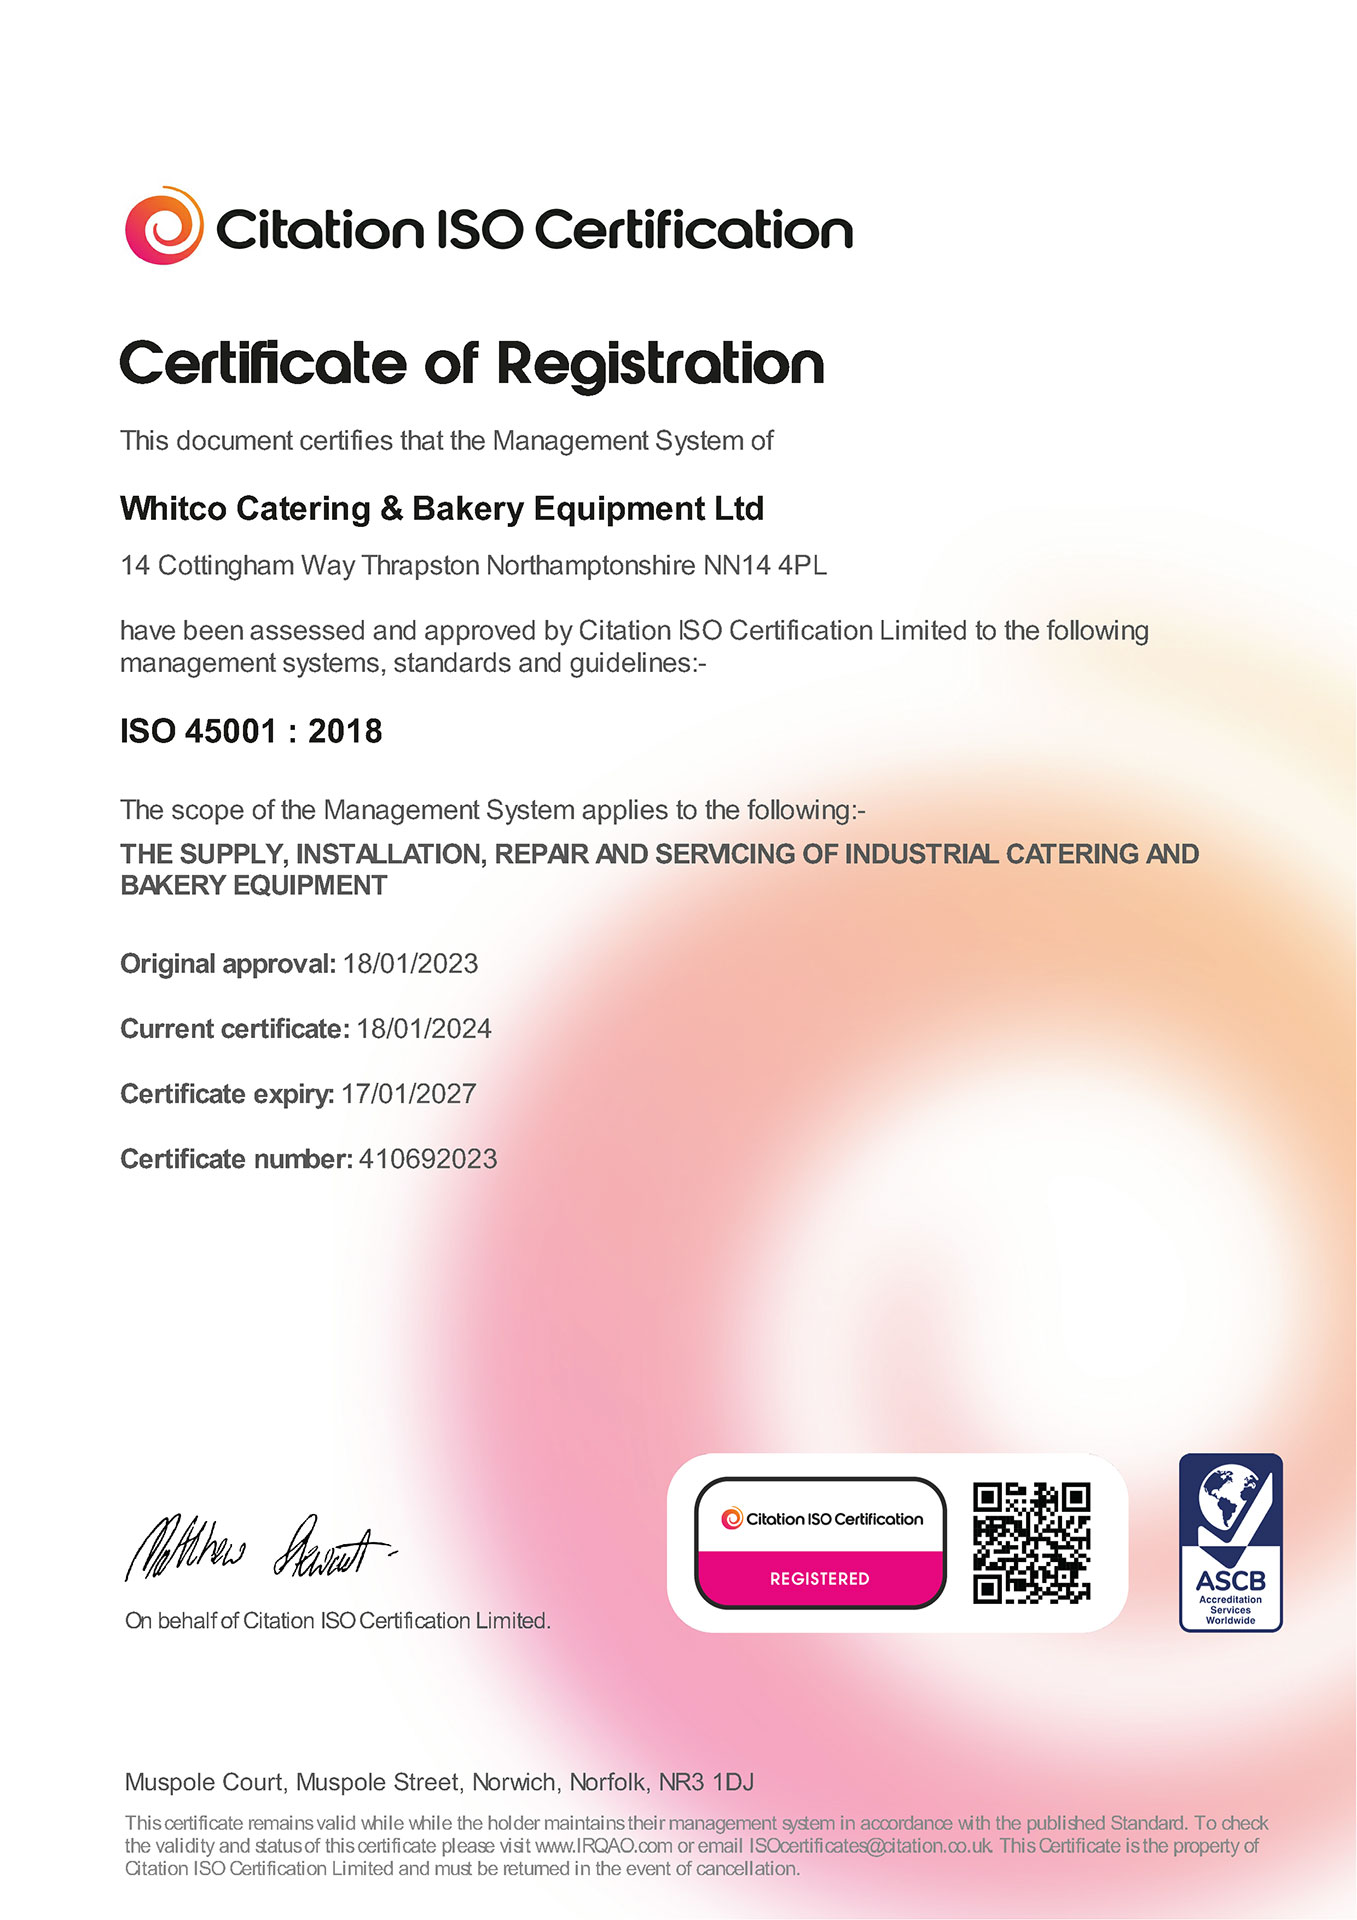 ISO 45001:2018 Certificate of Registration